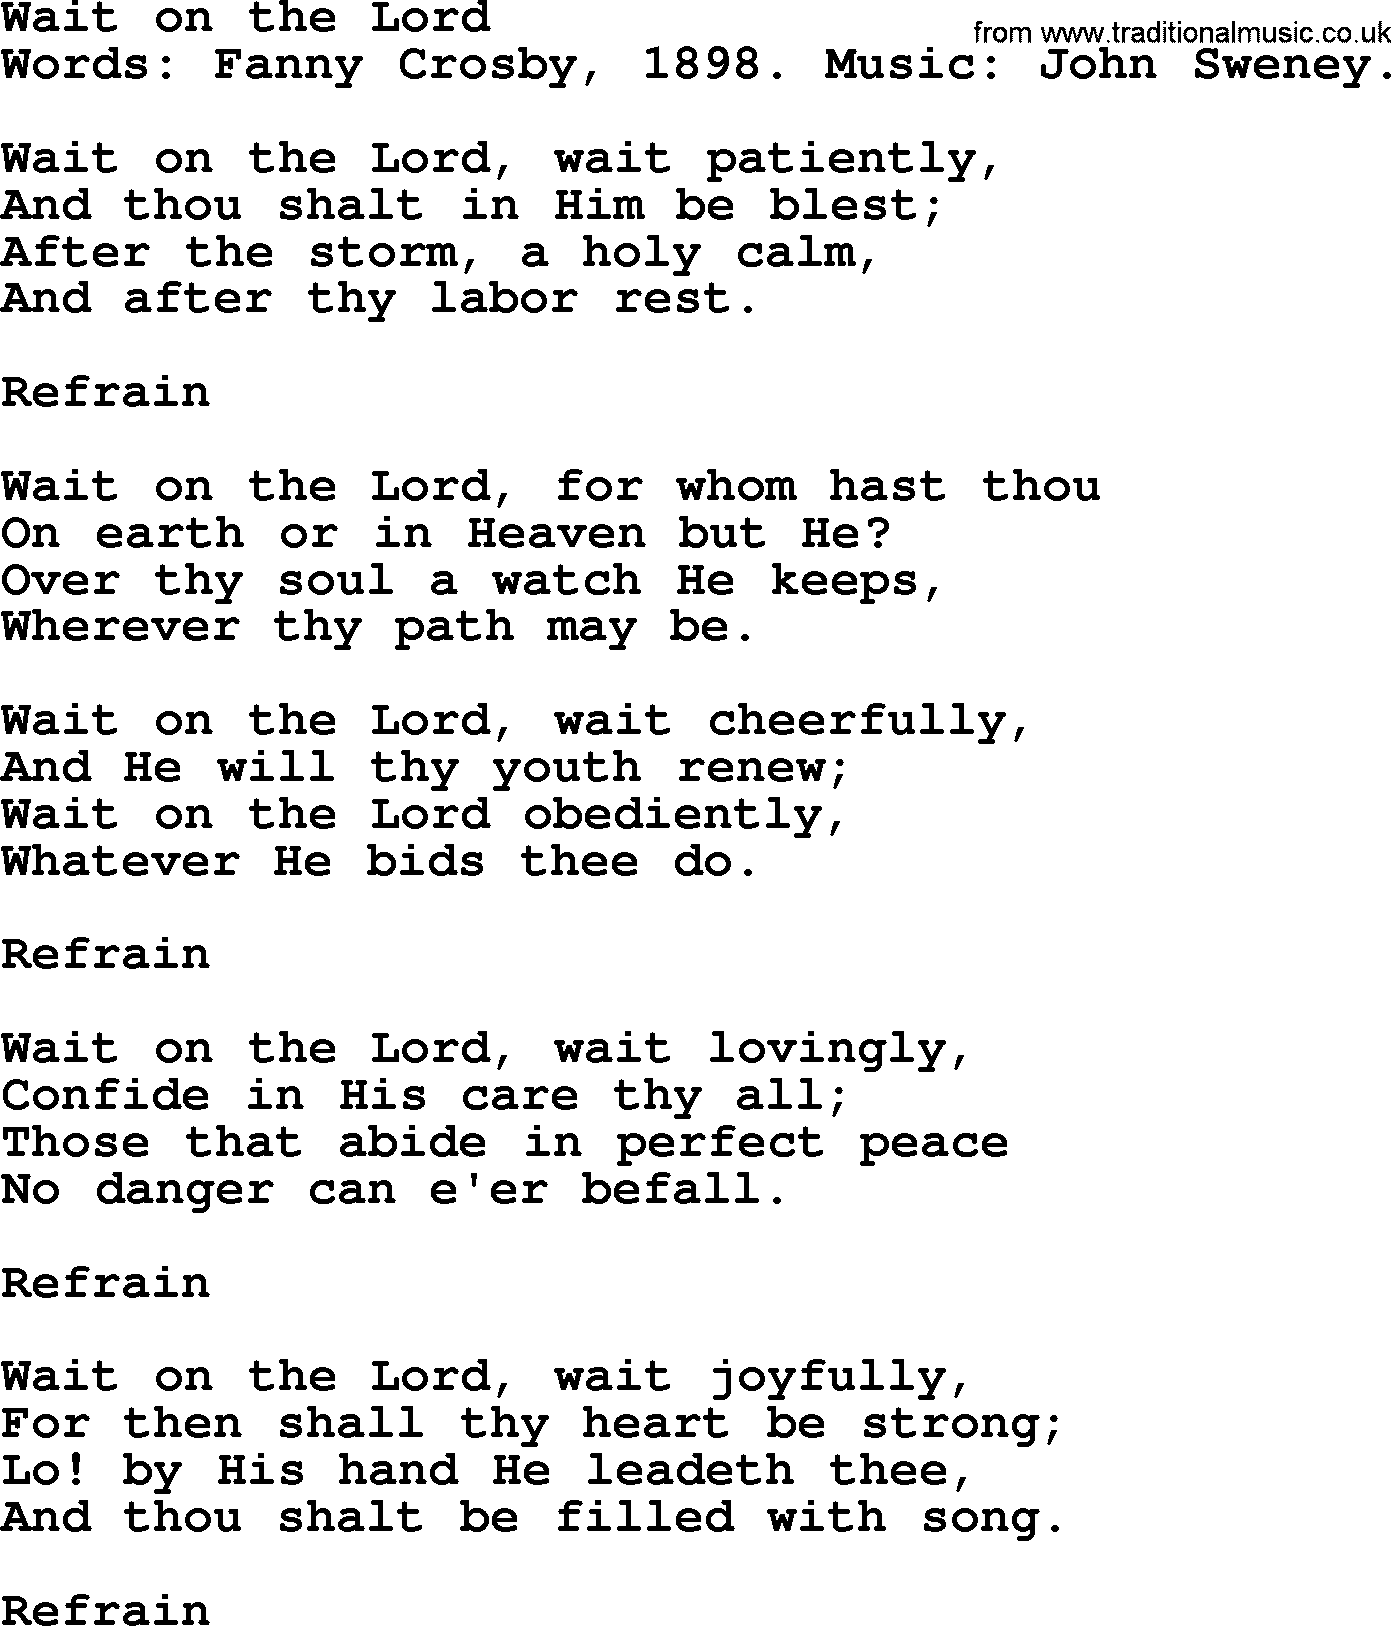 Fanny Crosby song: Wait On The Lord, lyrics